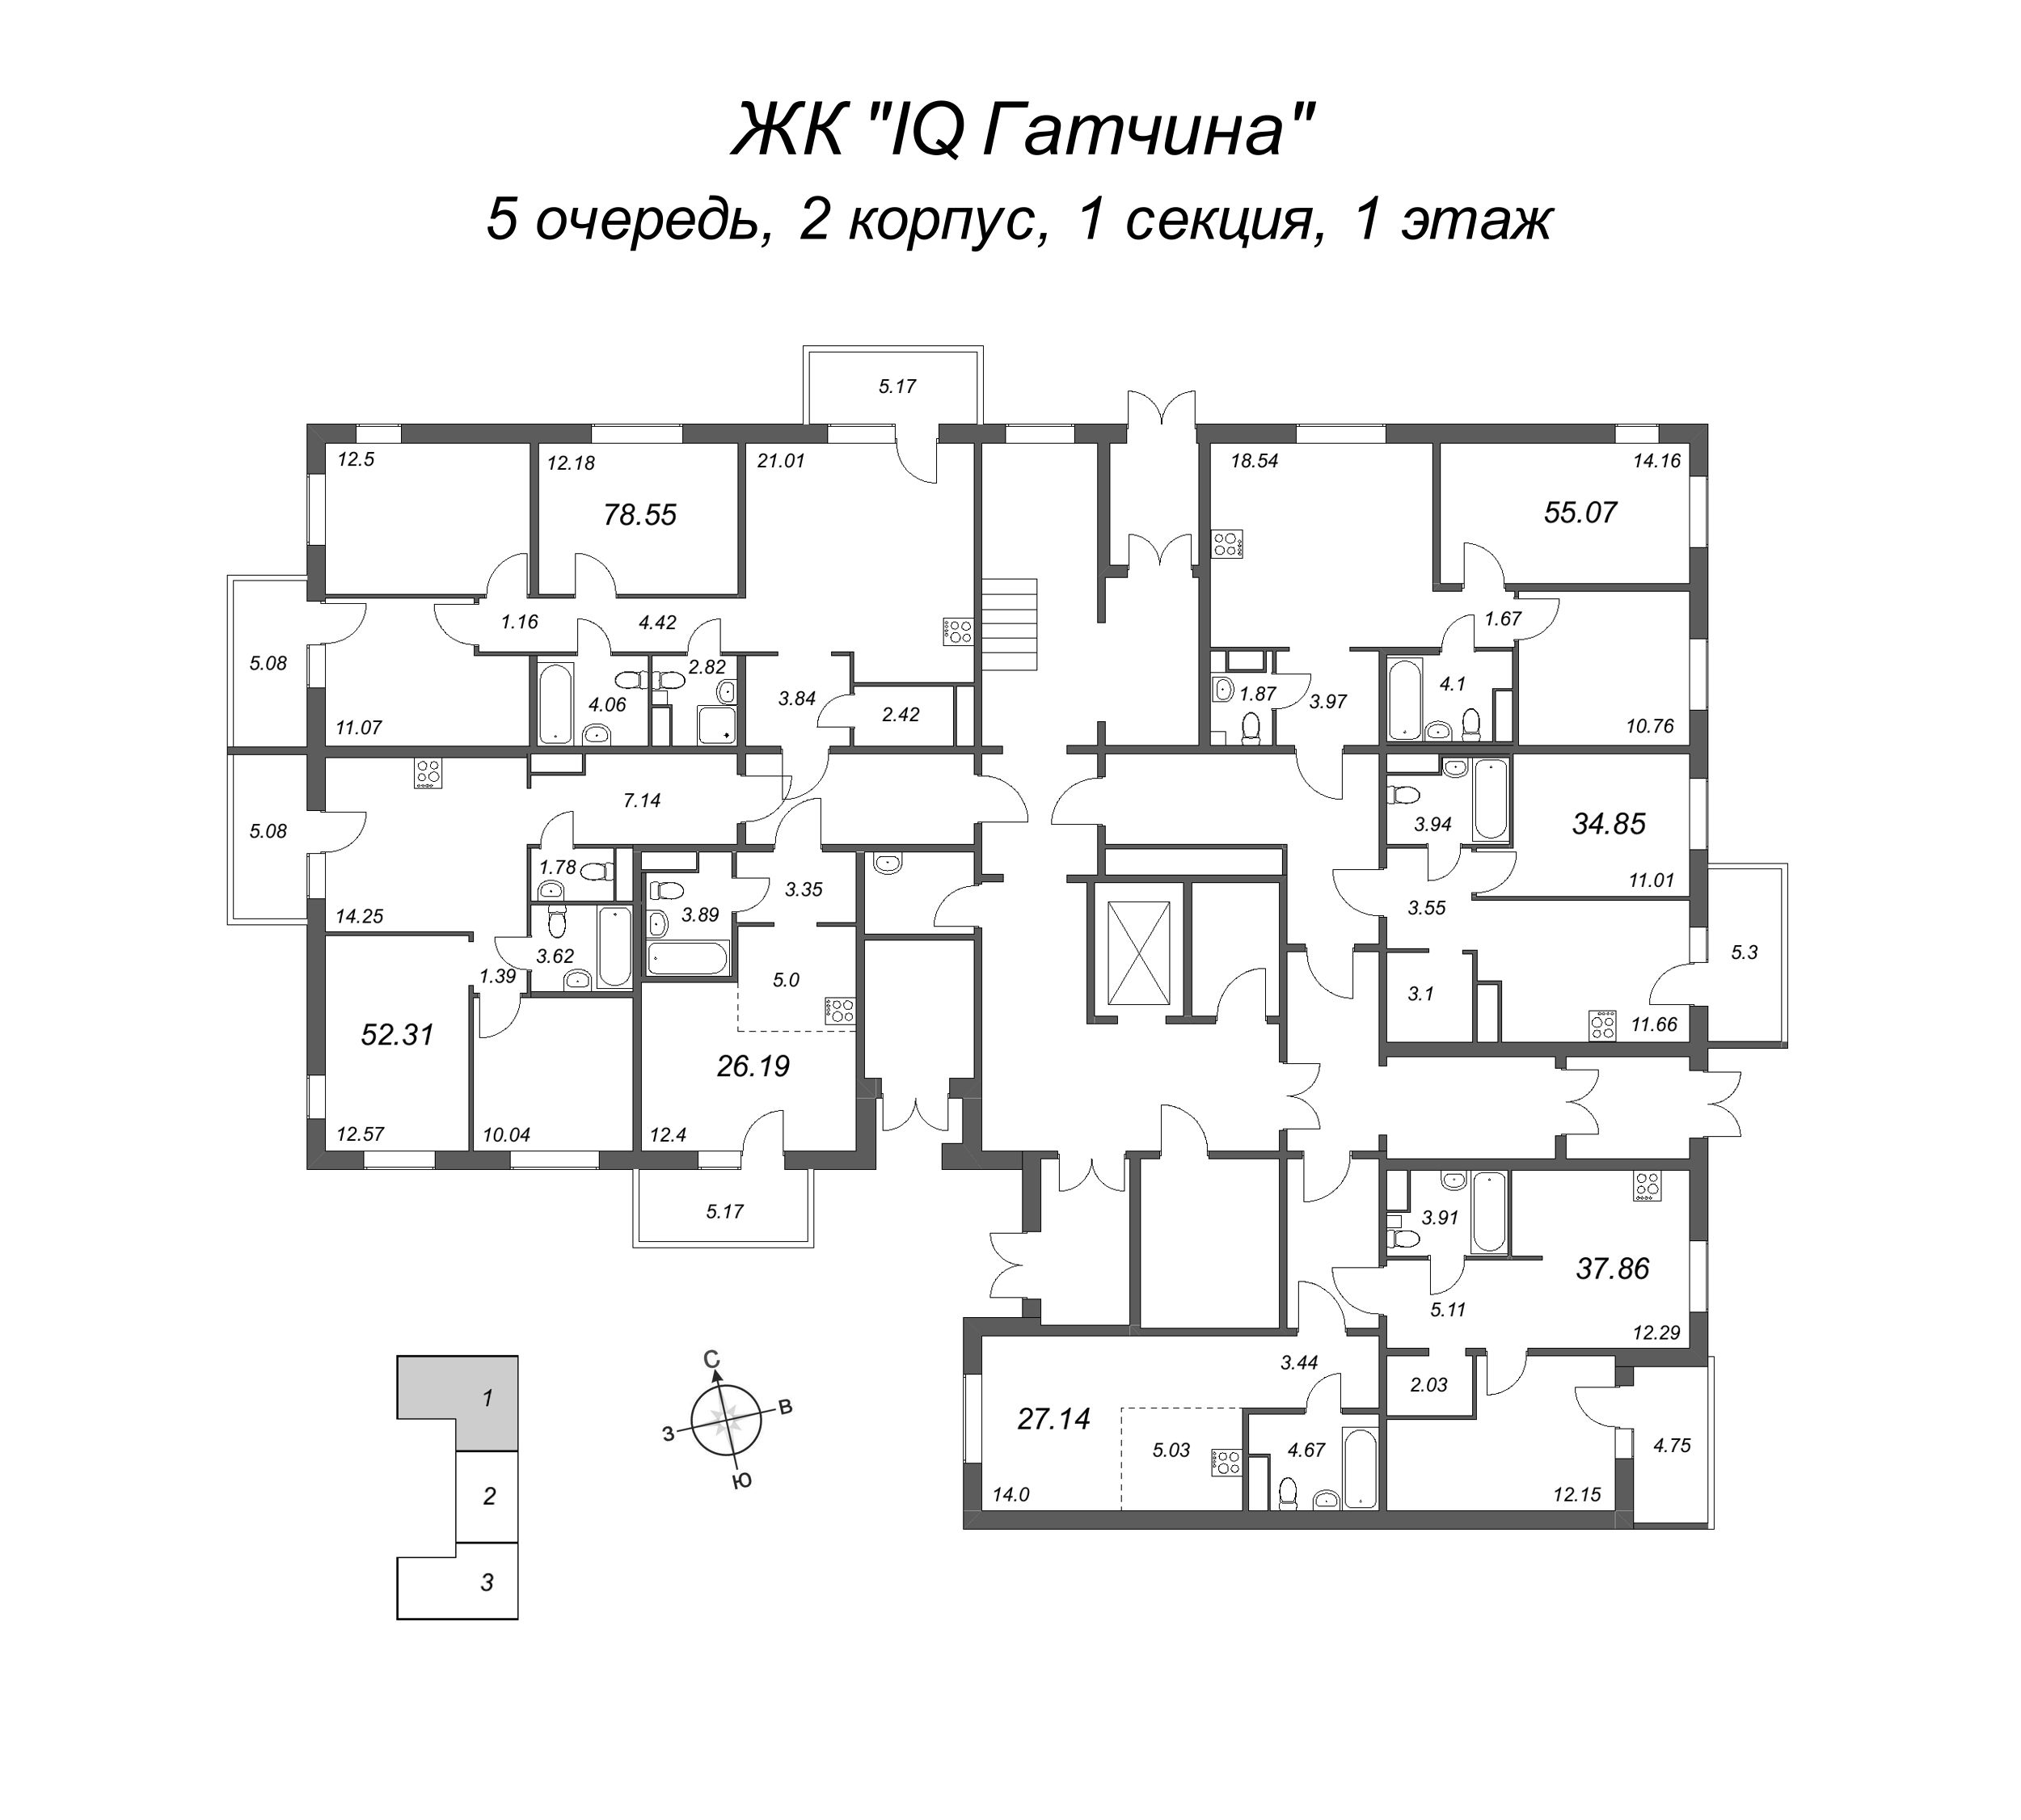 3-комнатная (Евро) квартира, 55.07 м² - планировка этажа